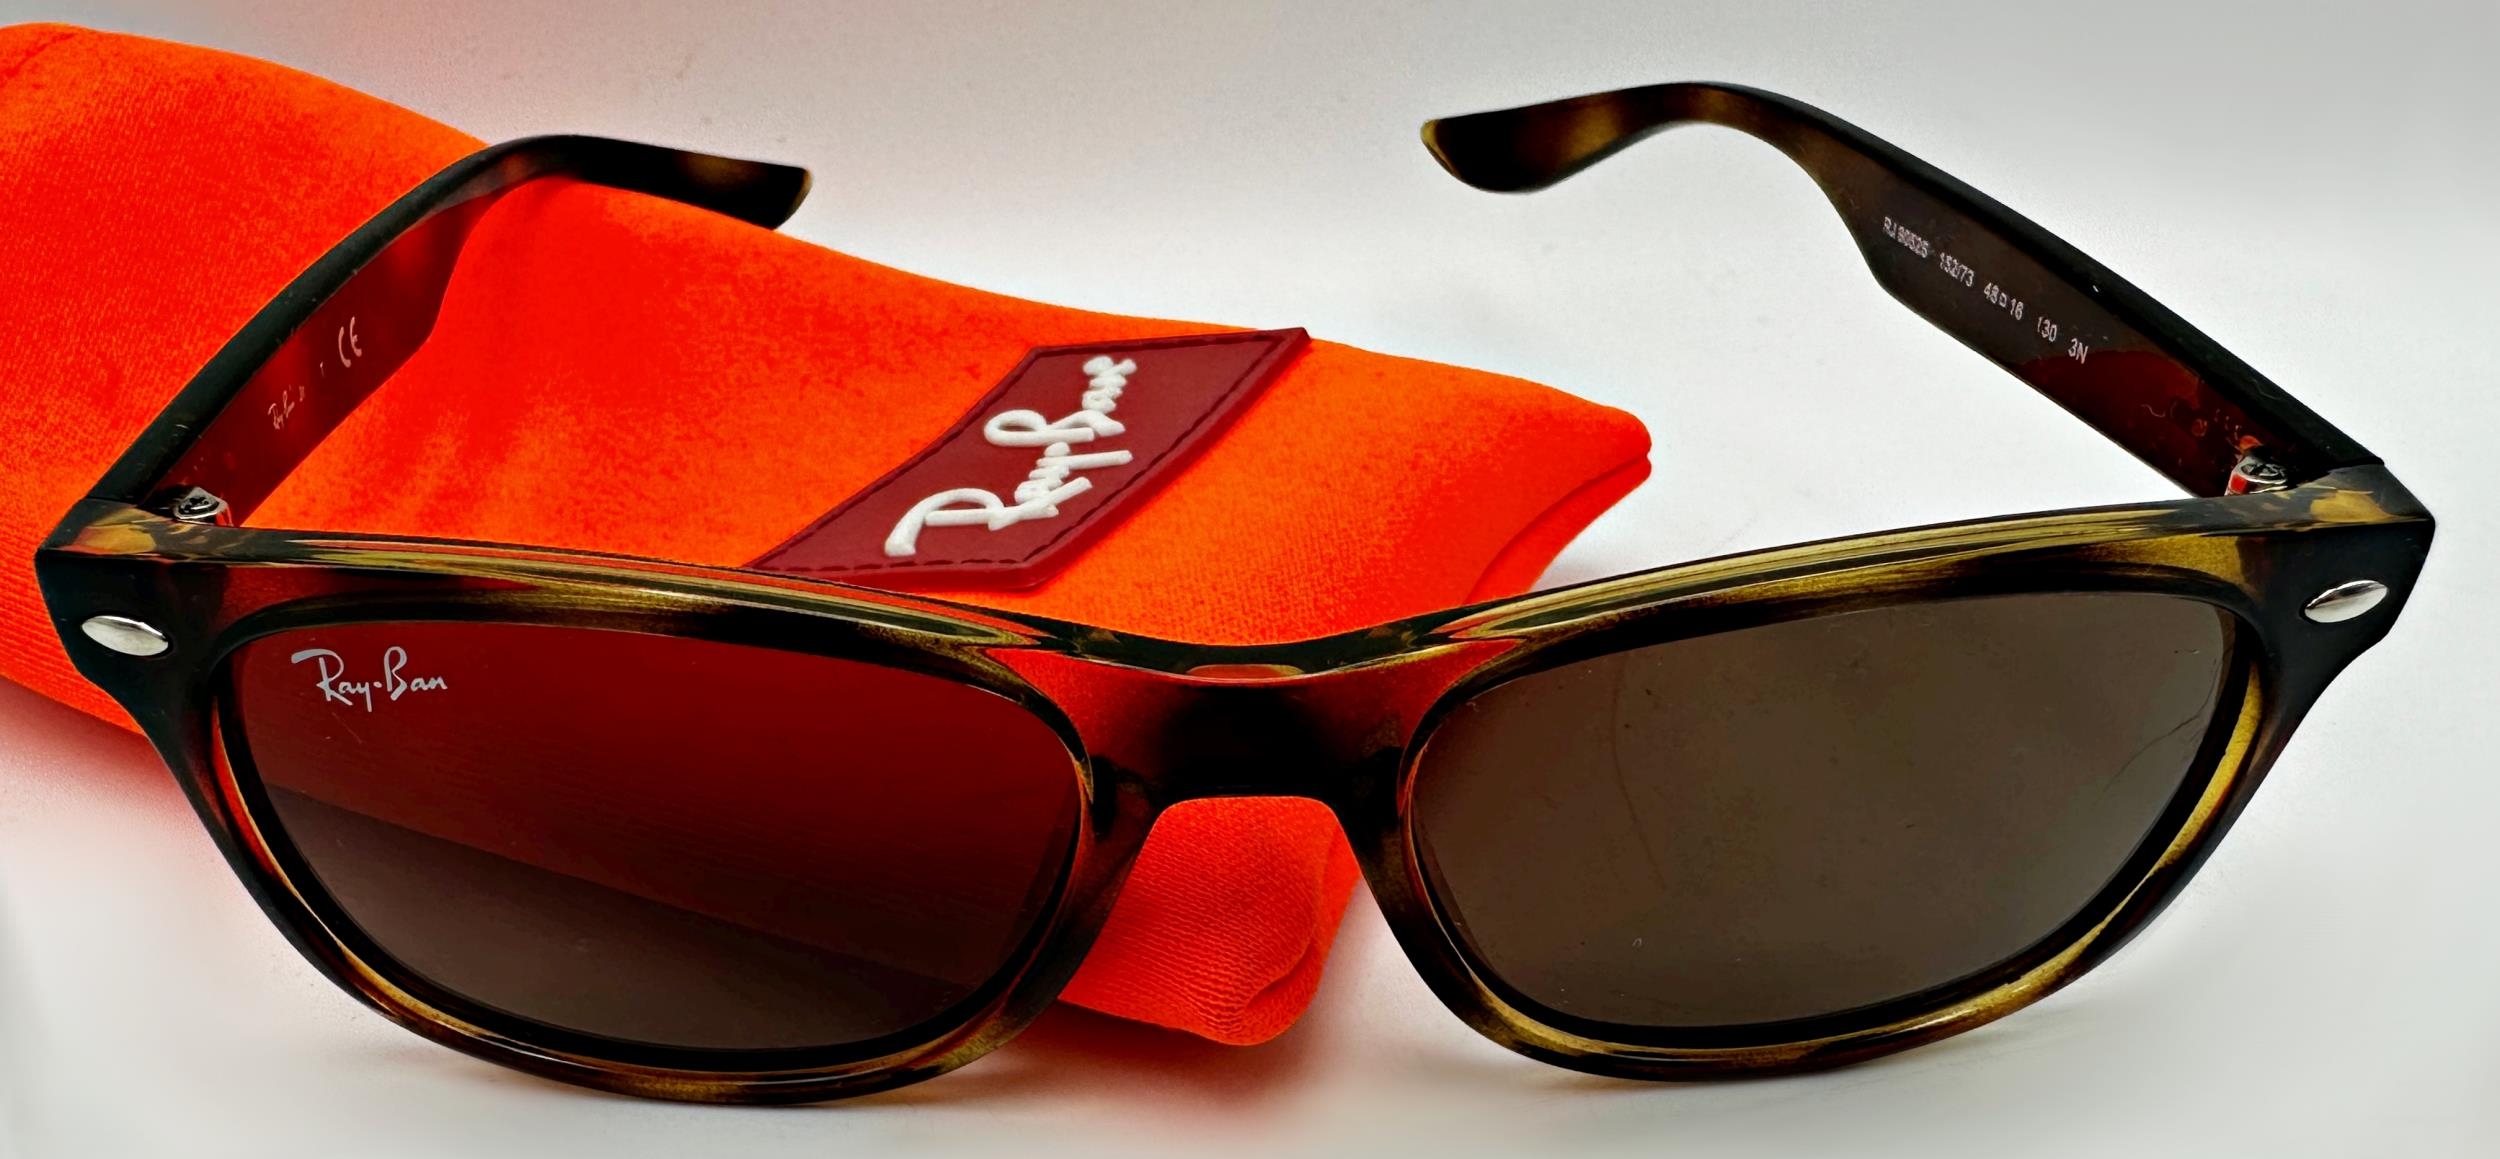 A pair of junior Ray-Ban tortoiseshell sunglasses for children in the iconic Wayfarer design, - Image 2 of 3